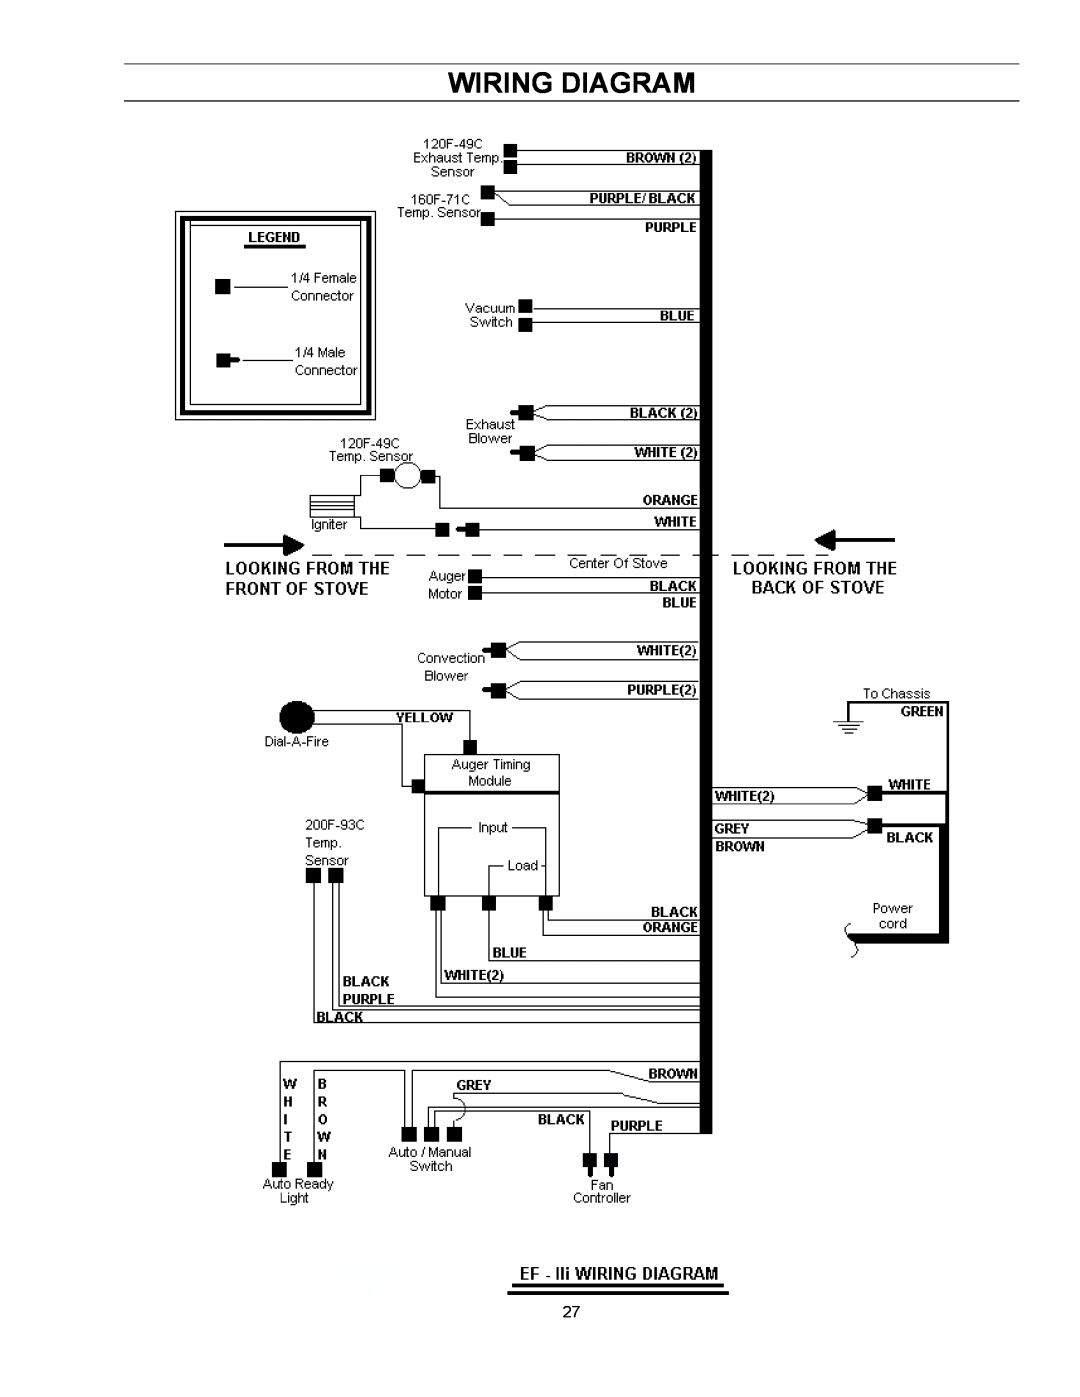 Enviro EF-II I technical manual Wiring Diagram 